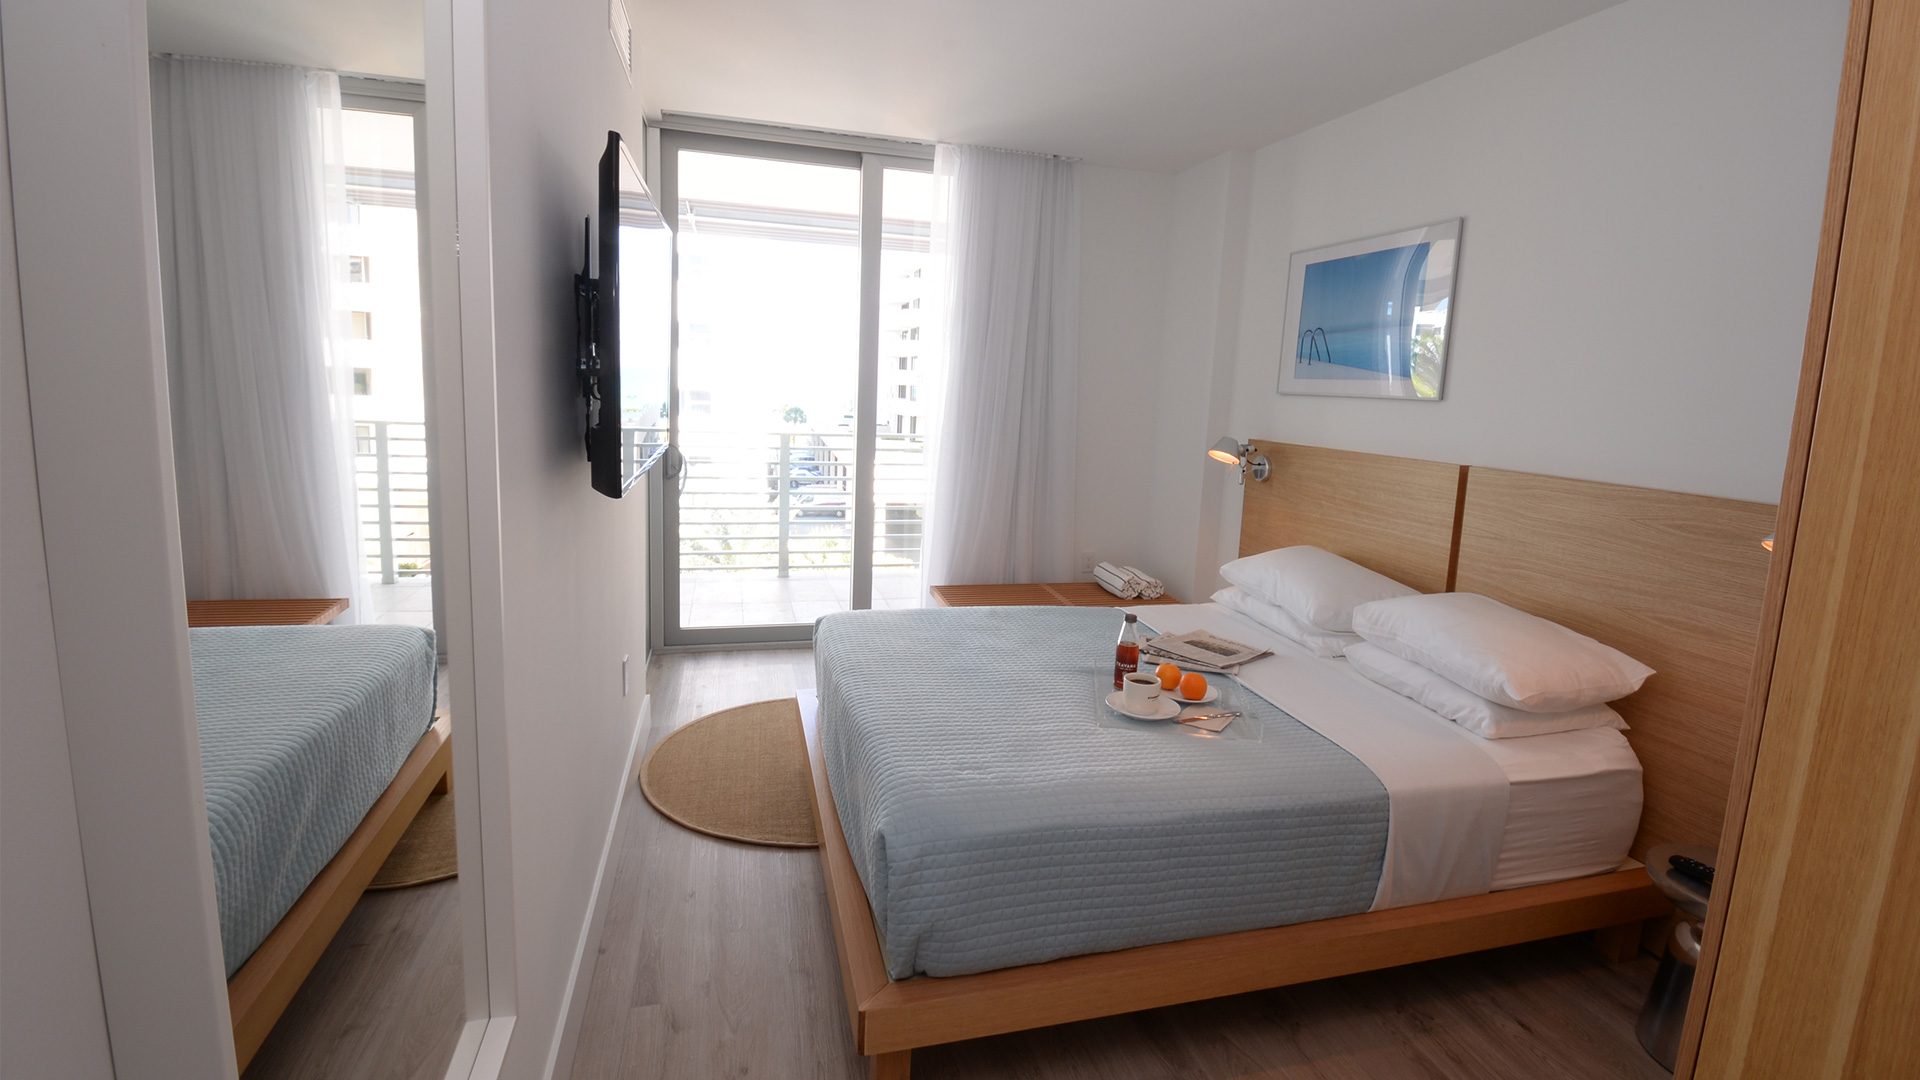 Oceanside-one-bedroom-suite-with-terrace-4